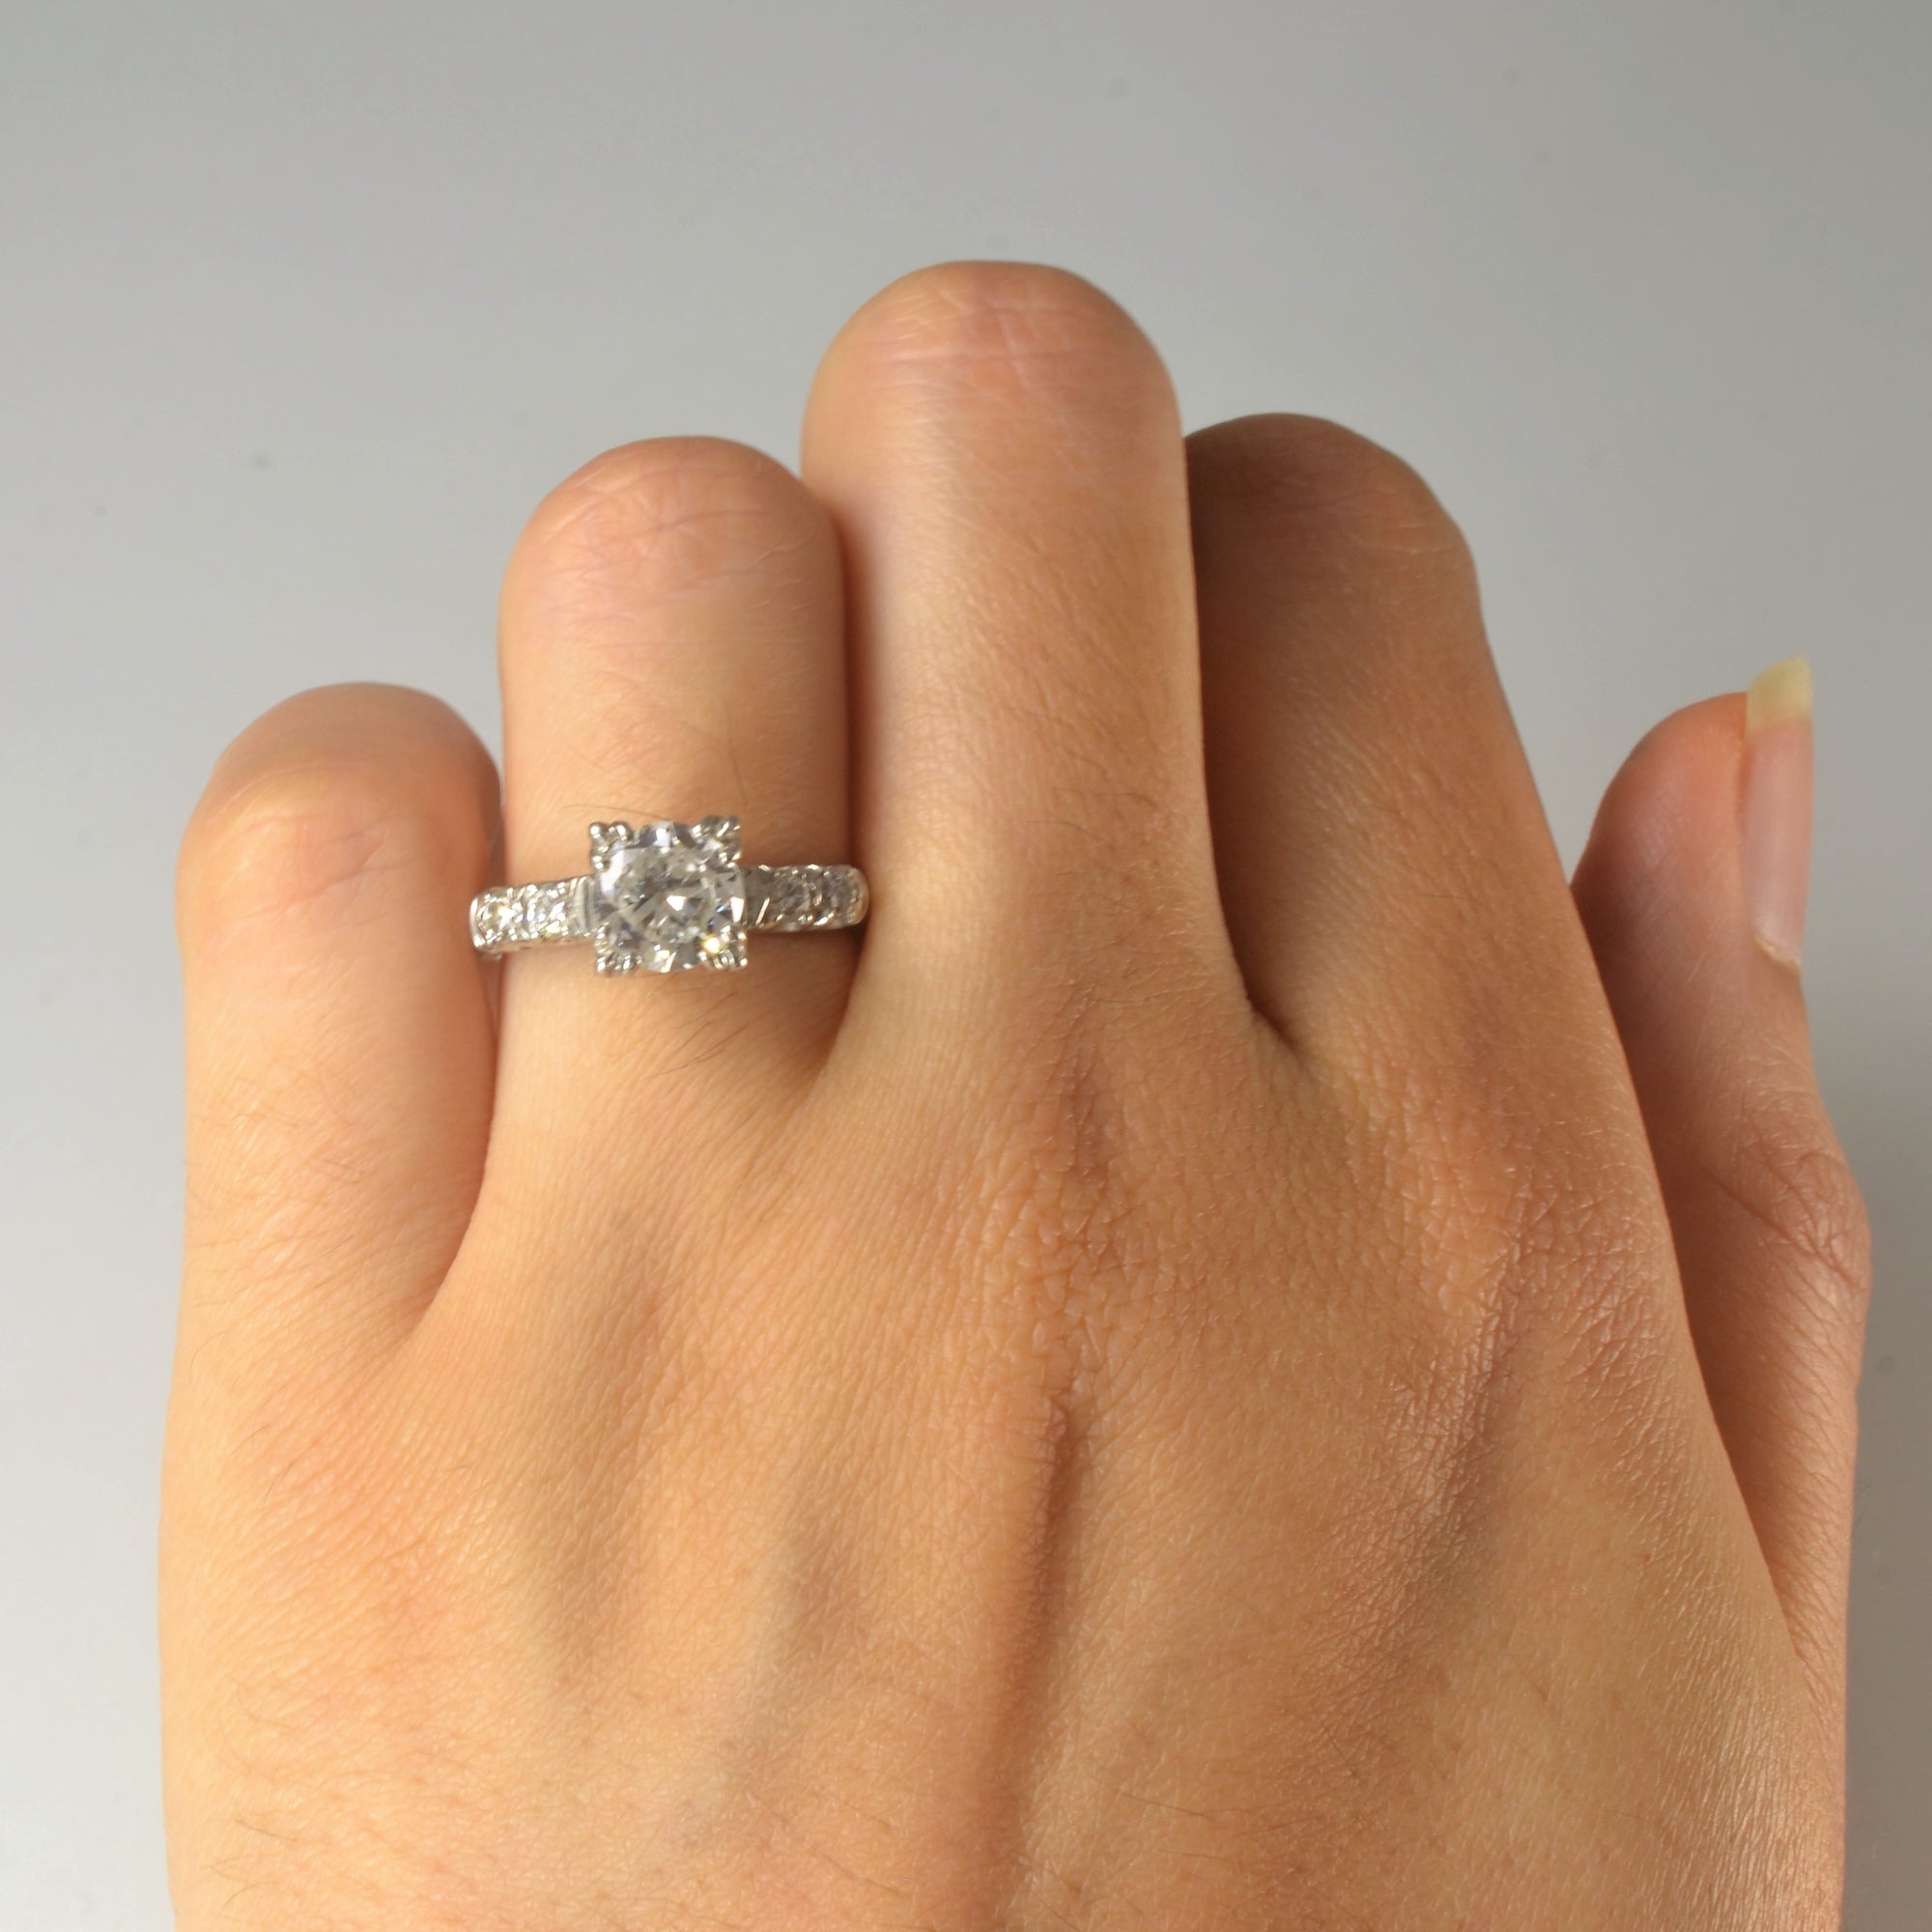 1940s Five Stone Diamond Engagement Ring | 1.20ctw | SZ 6 |